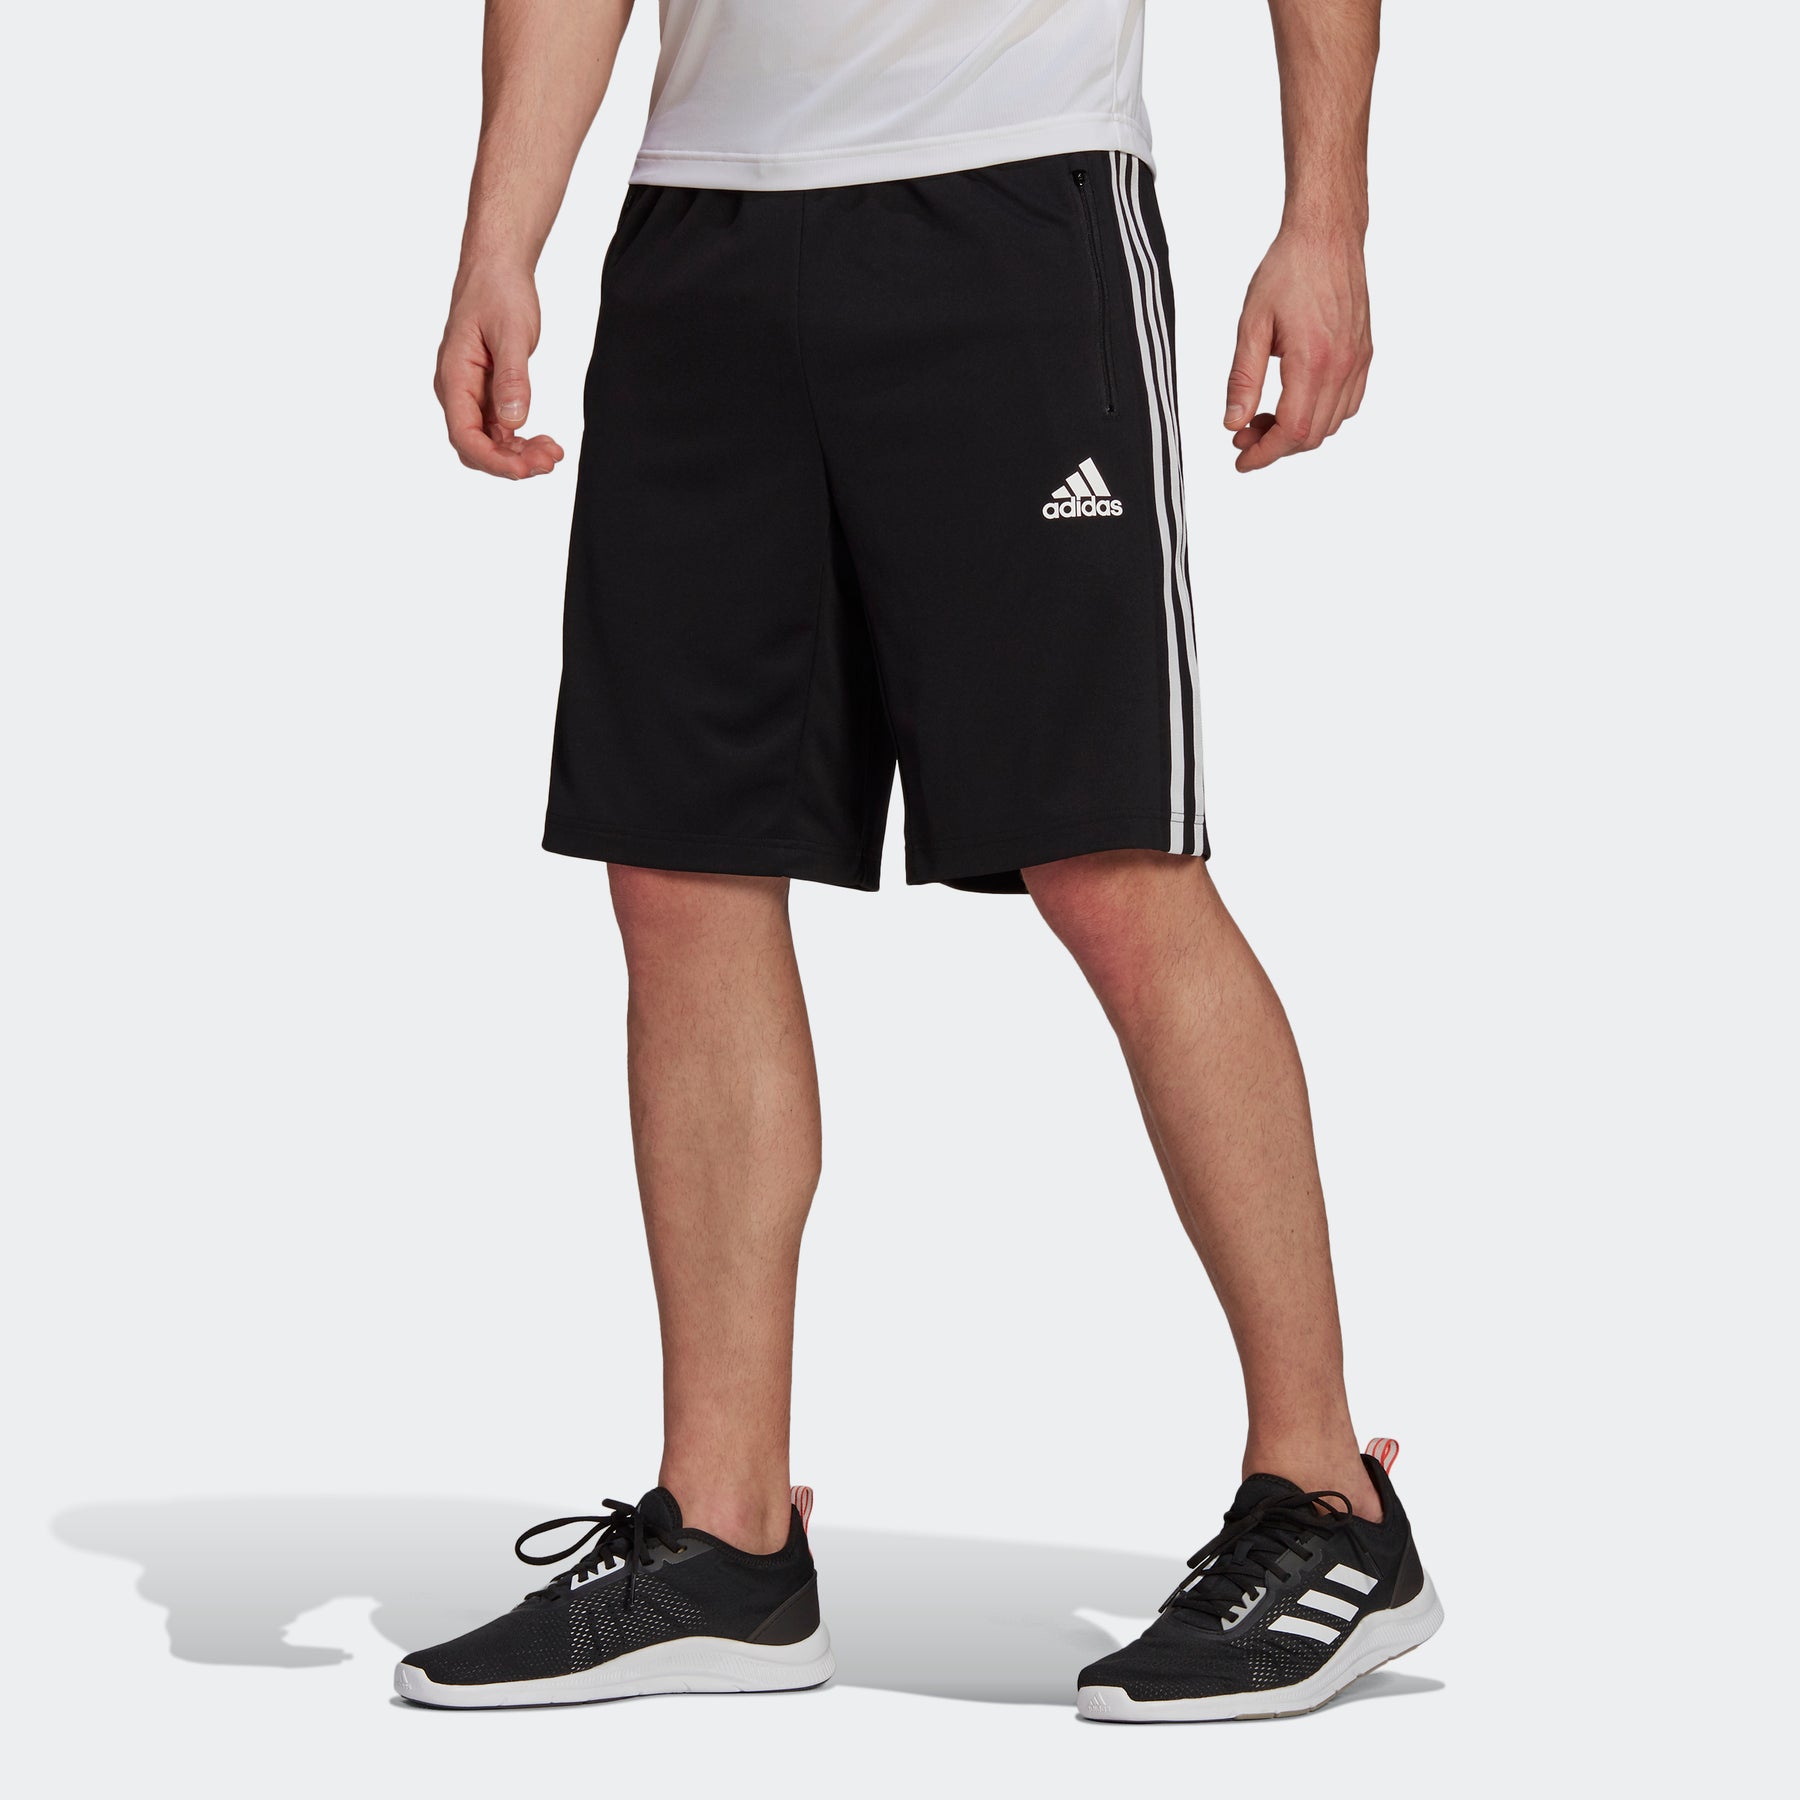 Men’s adidas Designed 2 Move 3-Stripes Shorts in Black/White  $13.51